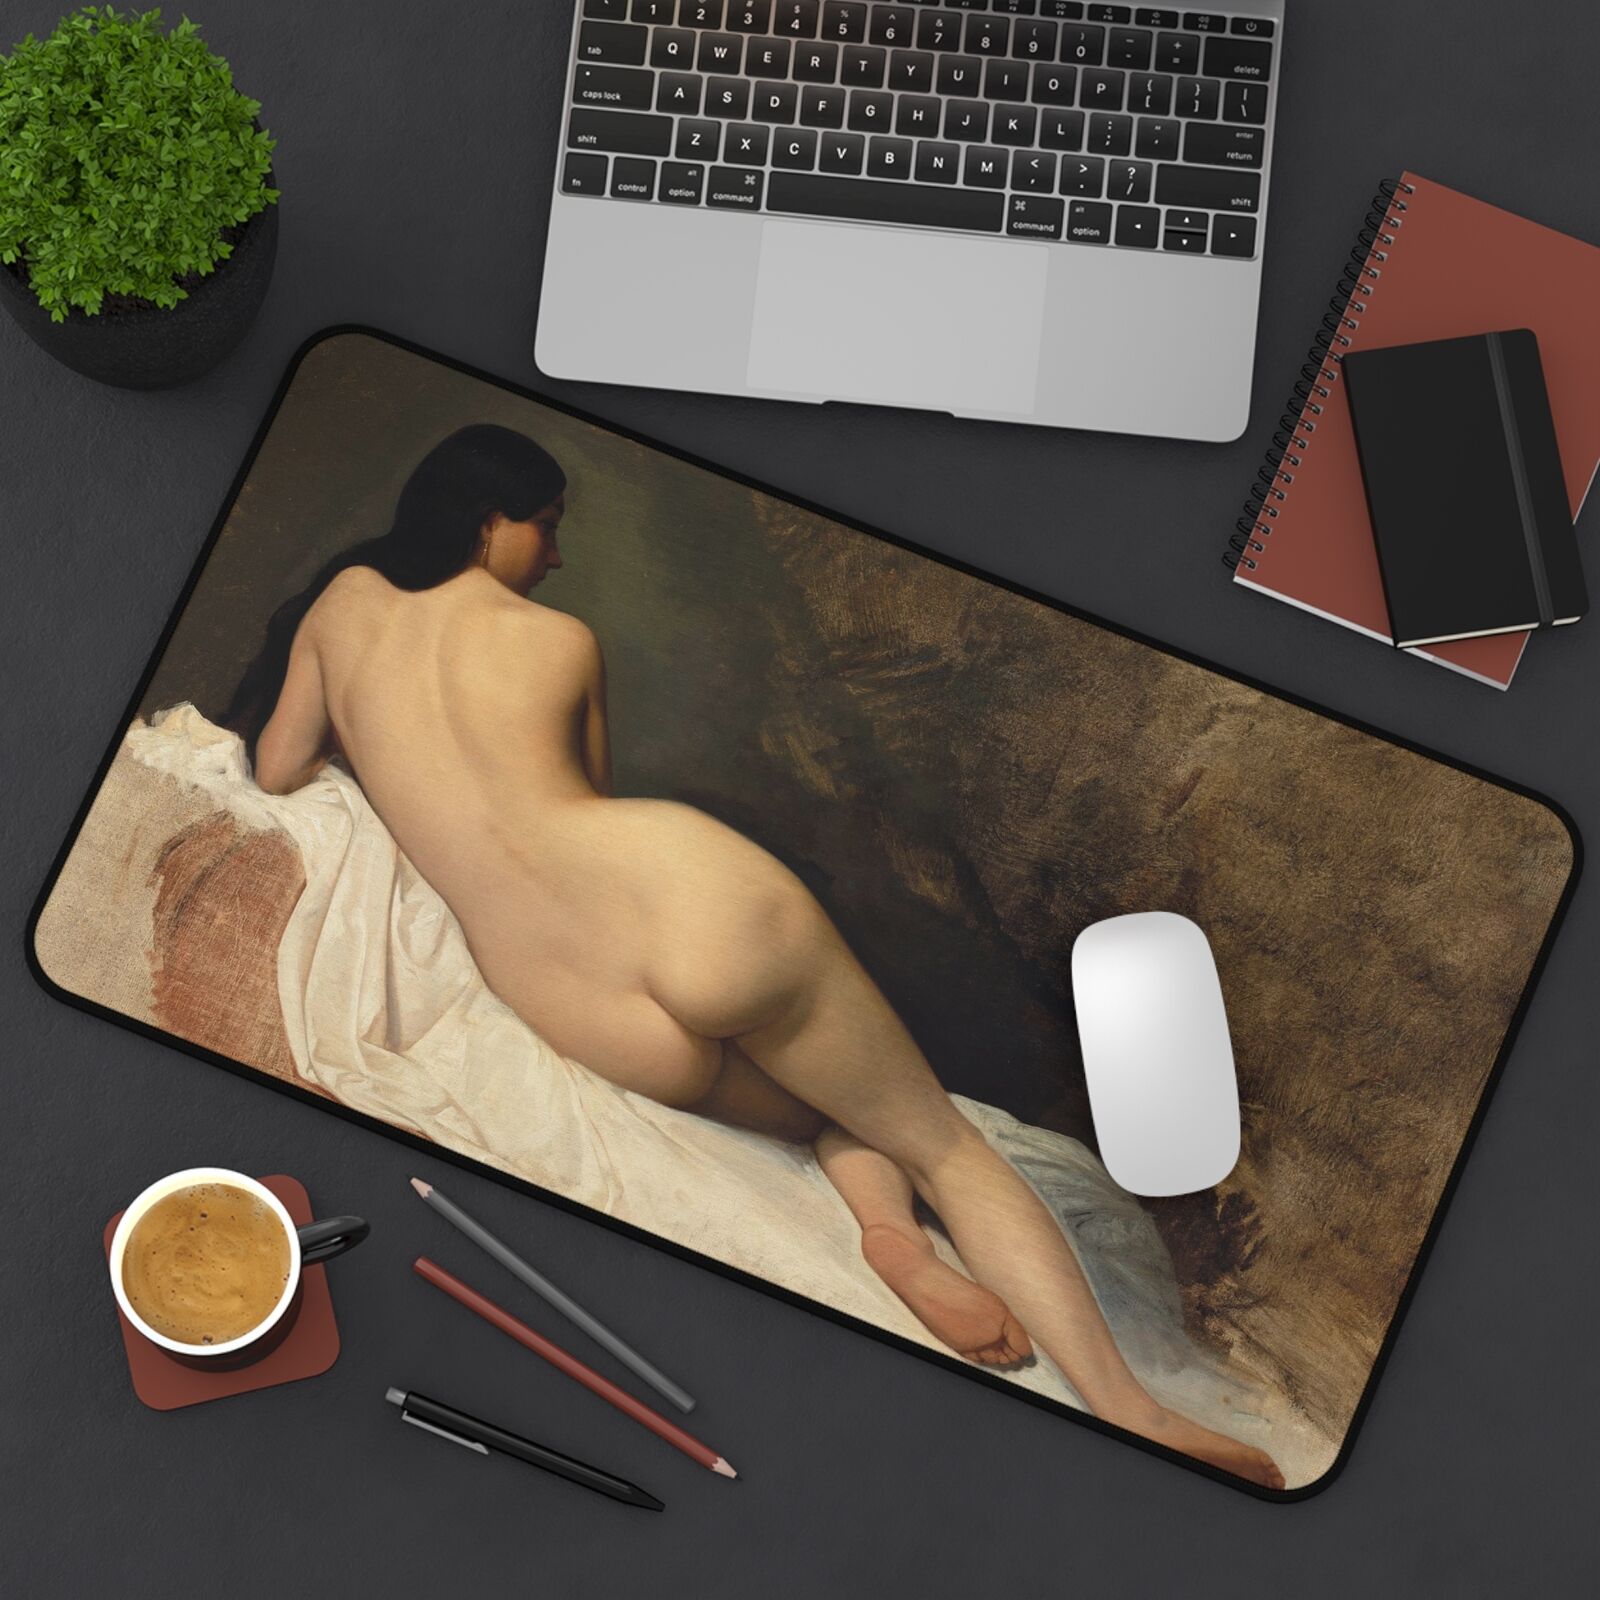 Nude Woman Desk Mat, TCG Playmat, Vintage Art, 2 Sizes